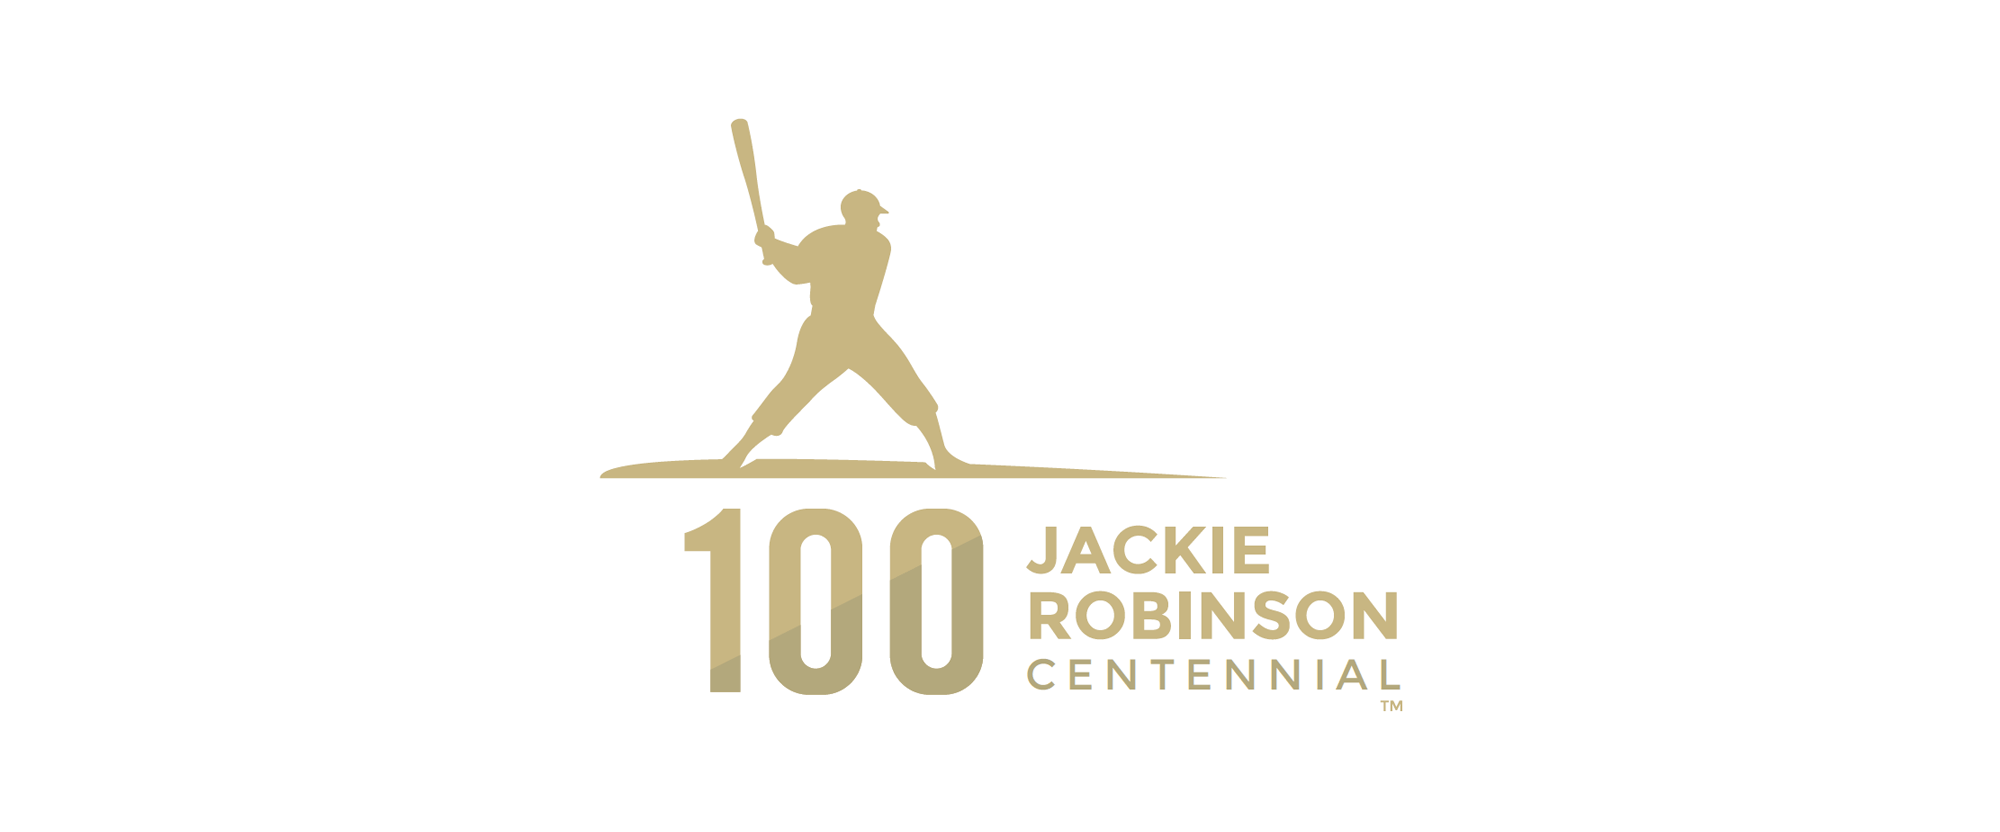 Jackie Logo - Brand New: New Logo for Jackie Robinson Centennial by Joe Bosack & Co